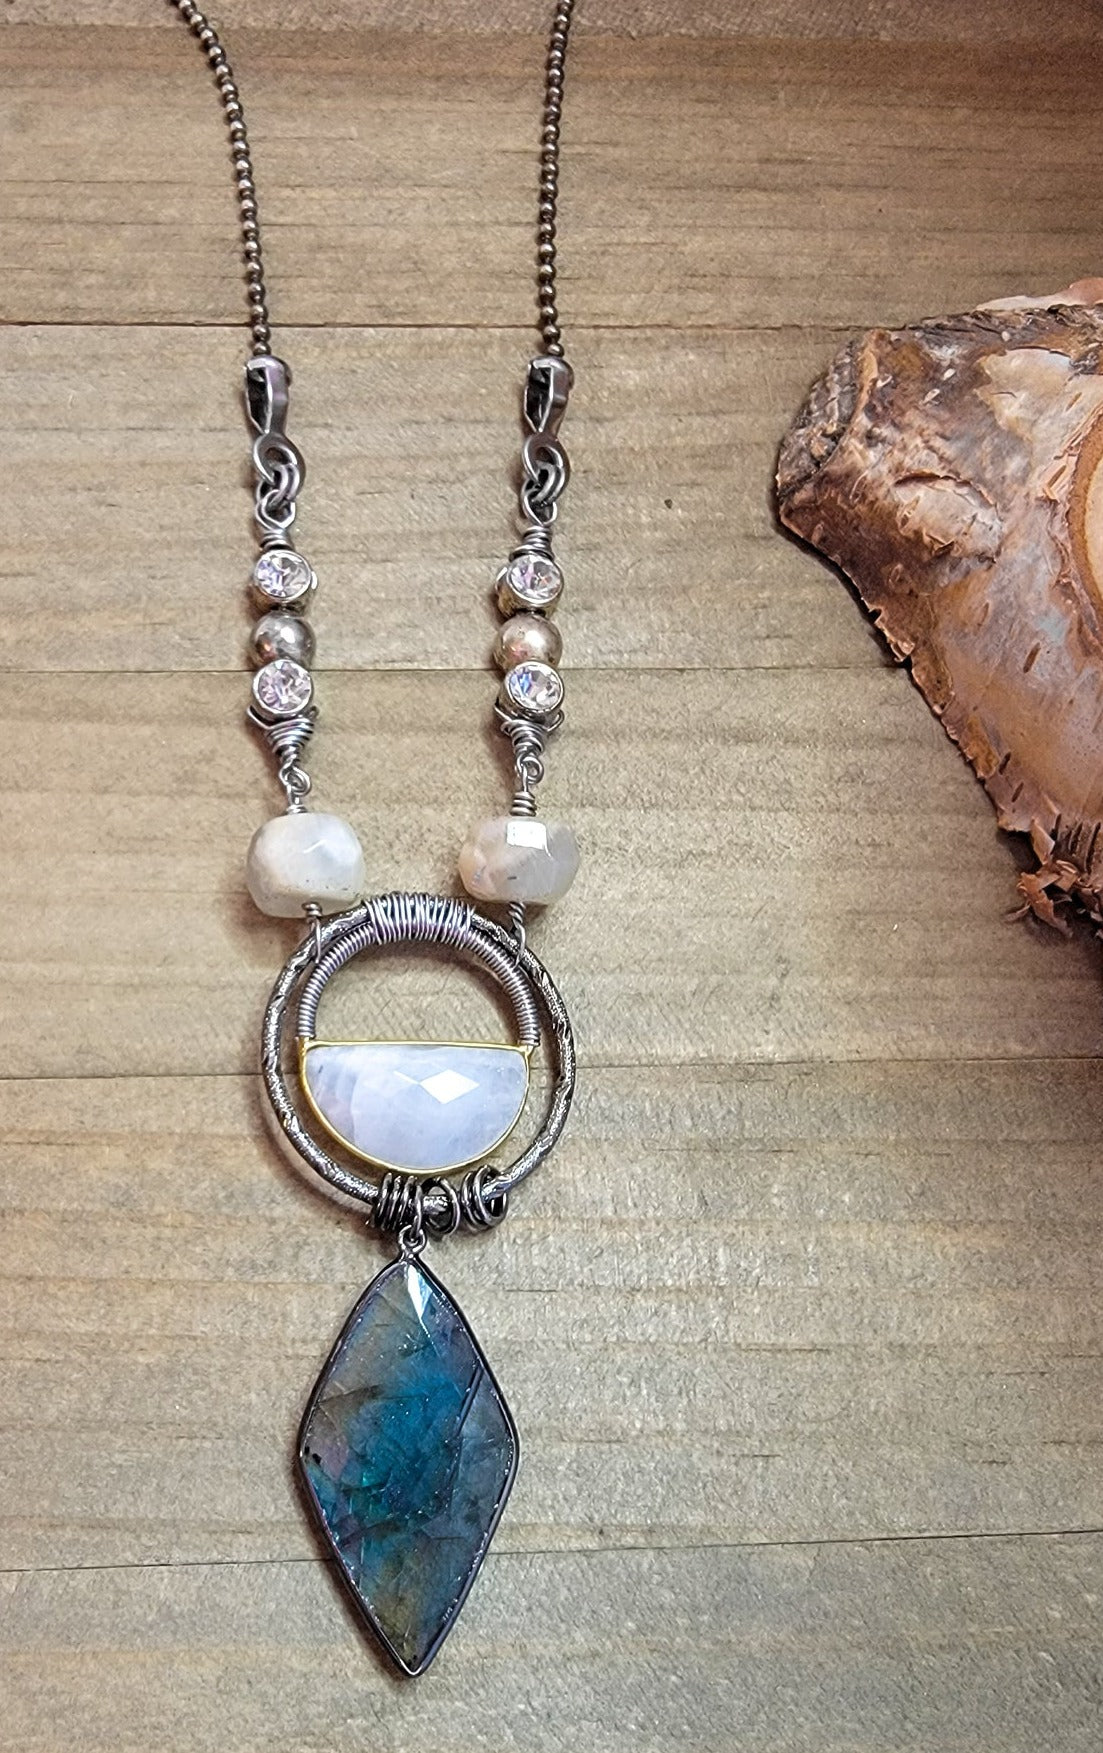 Moonstone and Labradorite Grunge Necklace - Nicki Lynn Jewelry